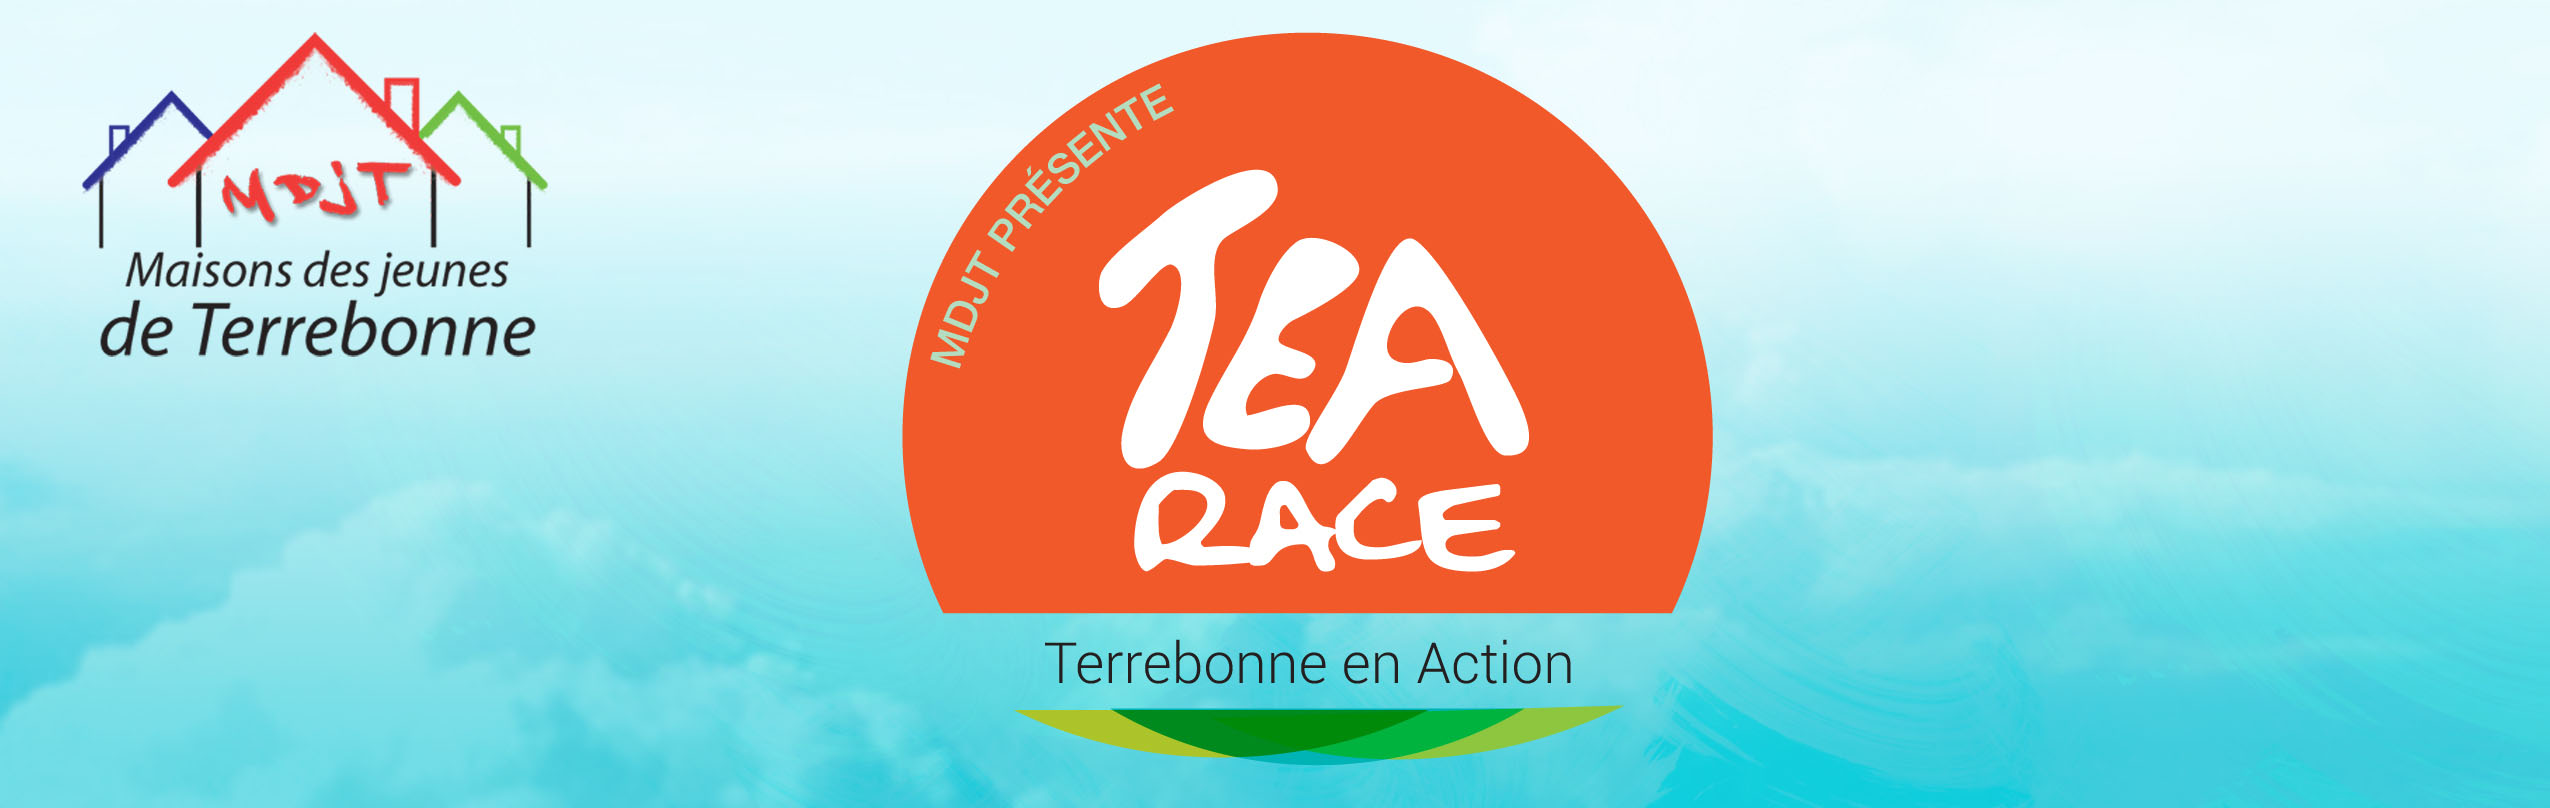 Tea Race - Terrebonne